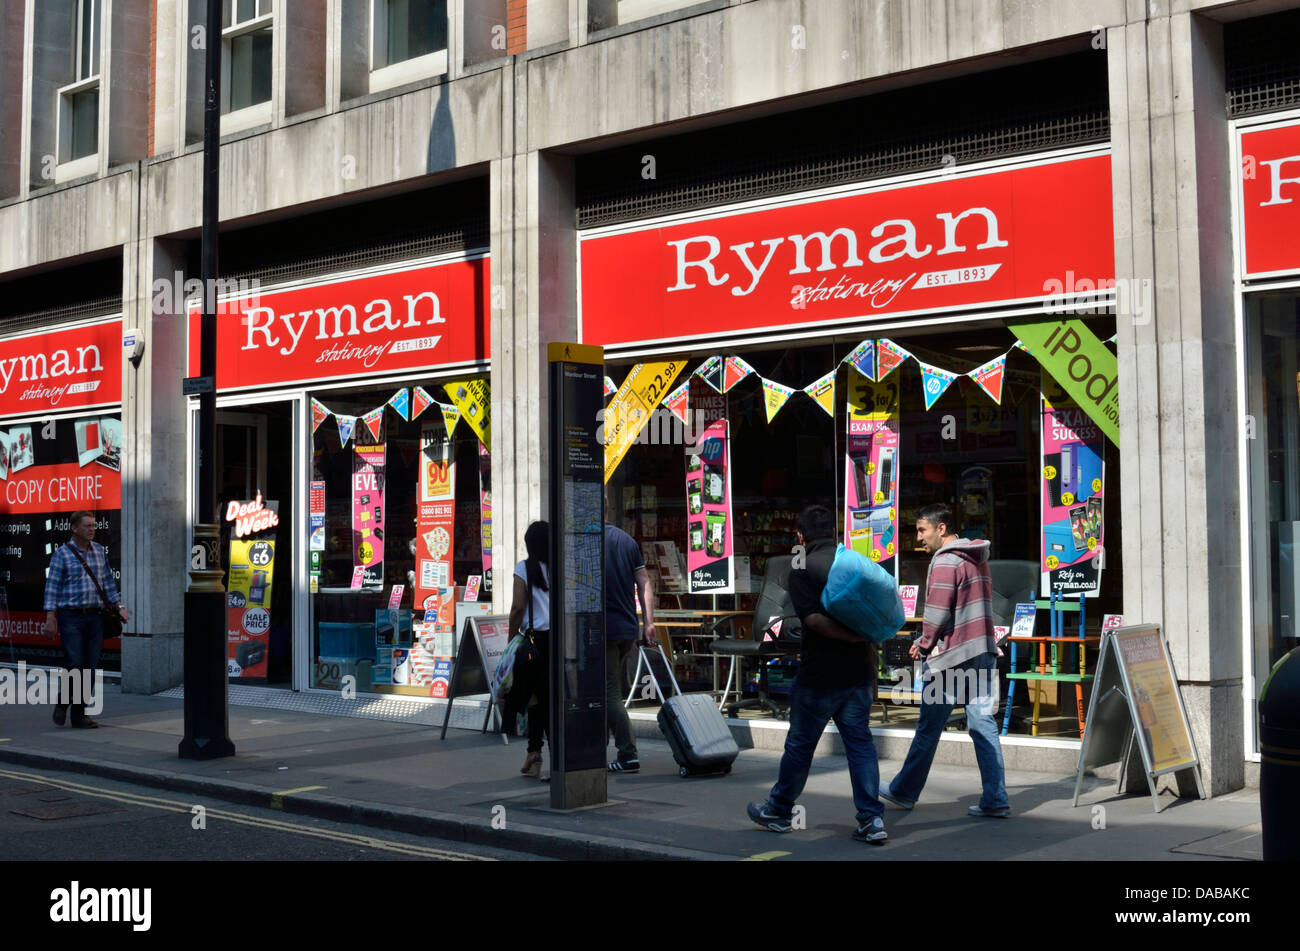 Ryman stationery and office supplies shop in Wardour Street, Soho, London, UK. Stock Photo